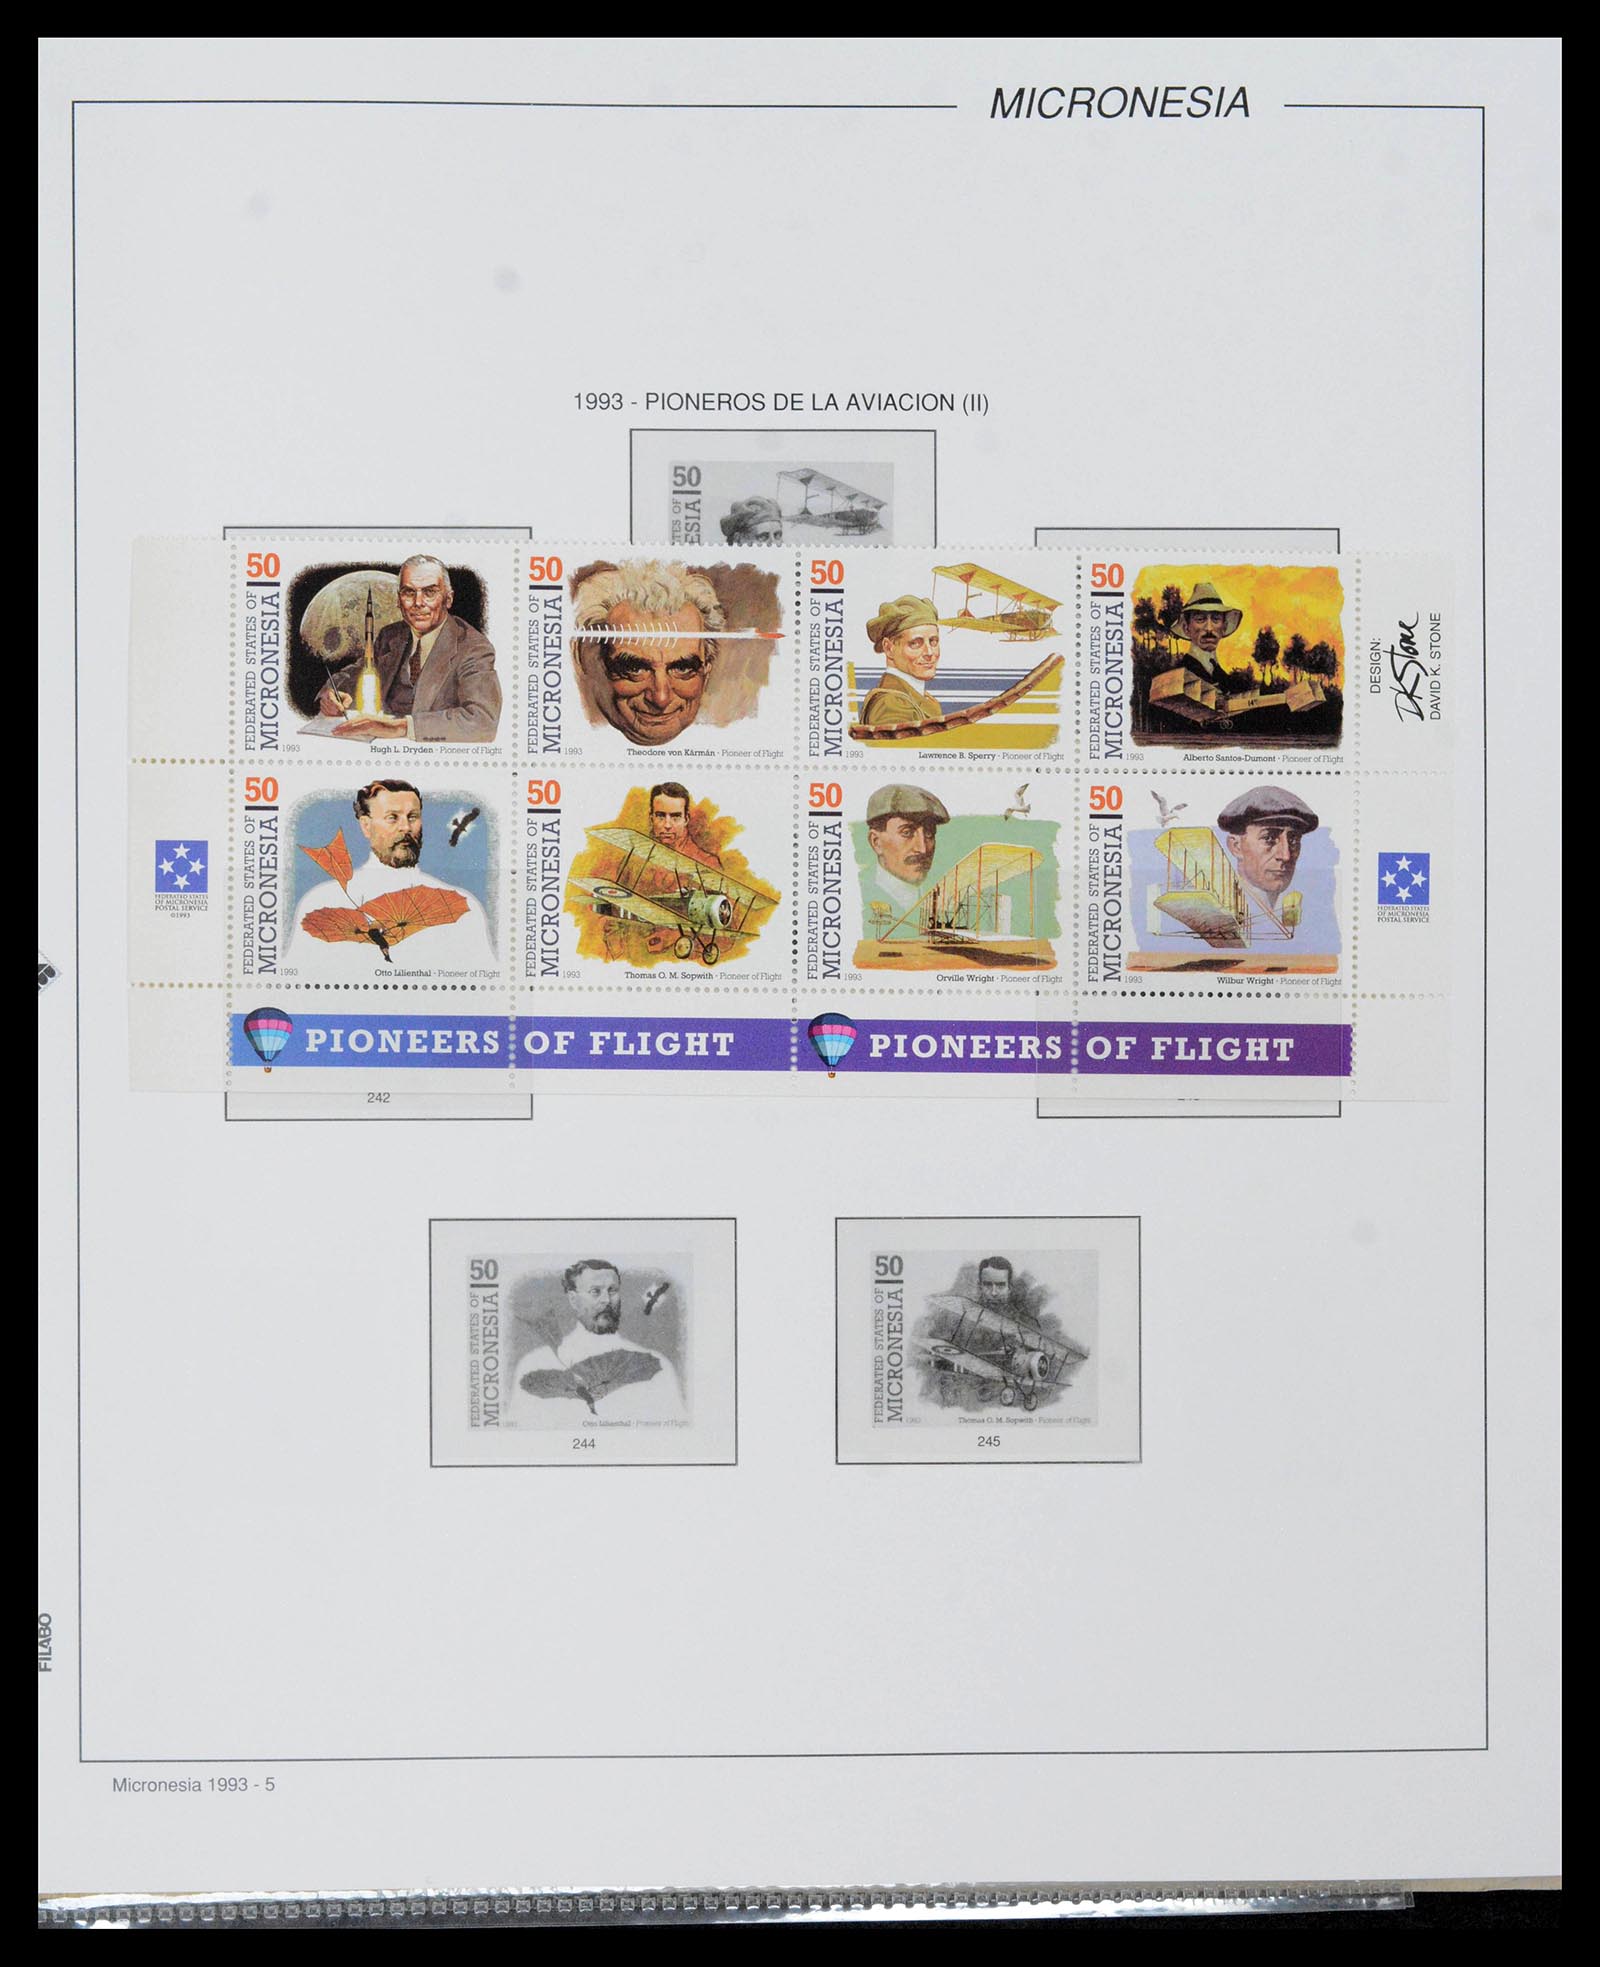 39222 0104 - Stamp collection 39222 Palau, Micronesia and Marshall islands 1980-1995.